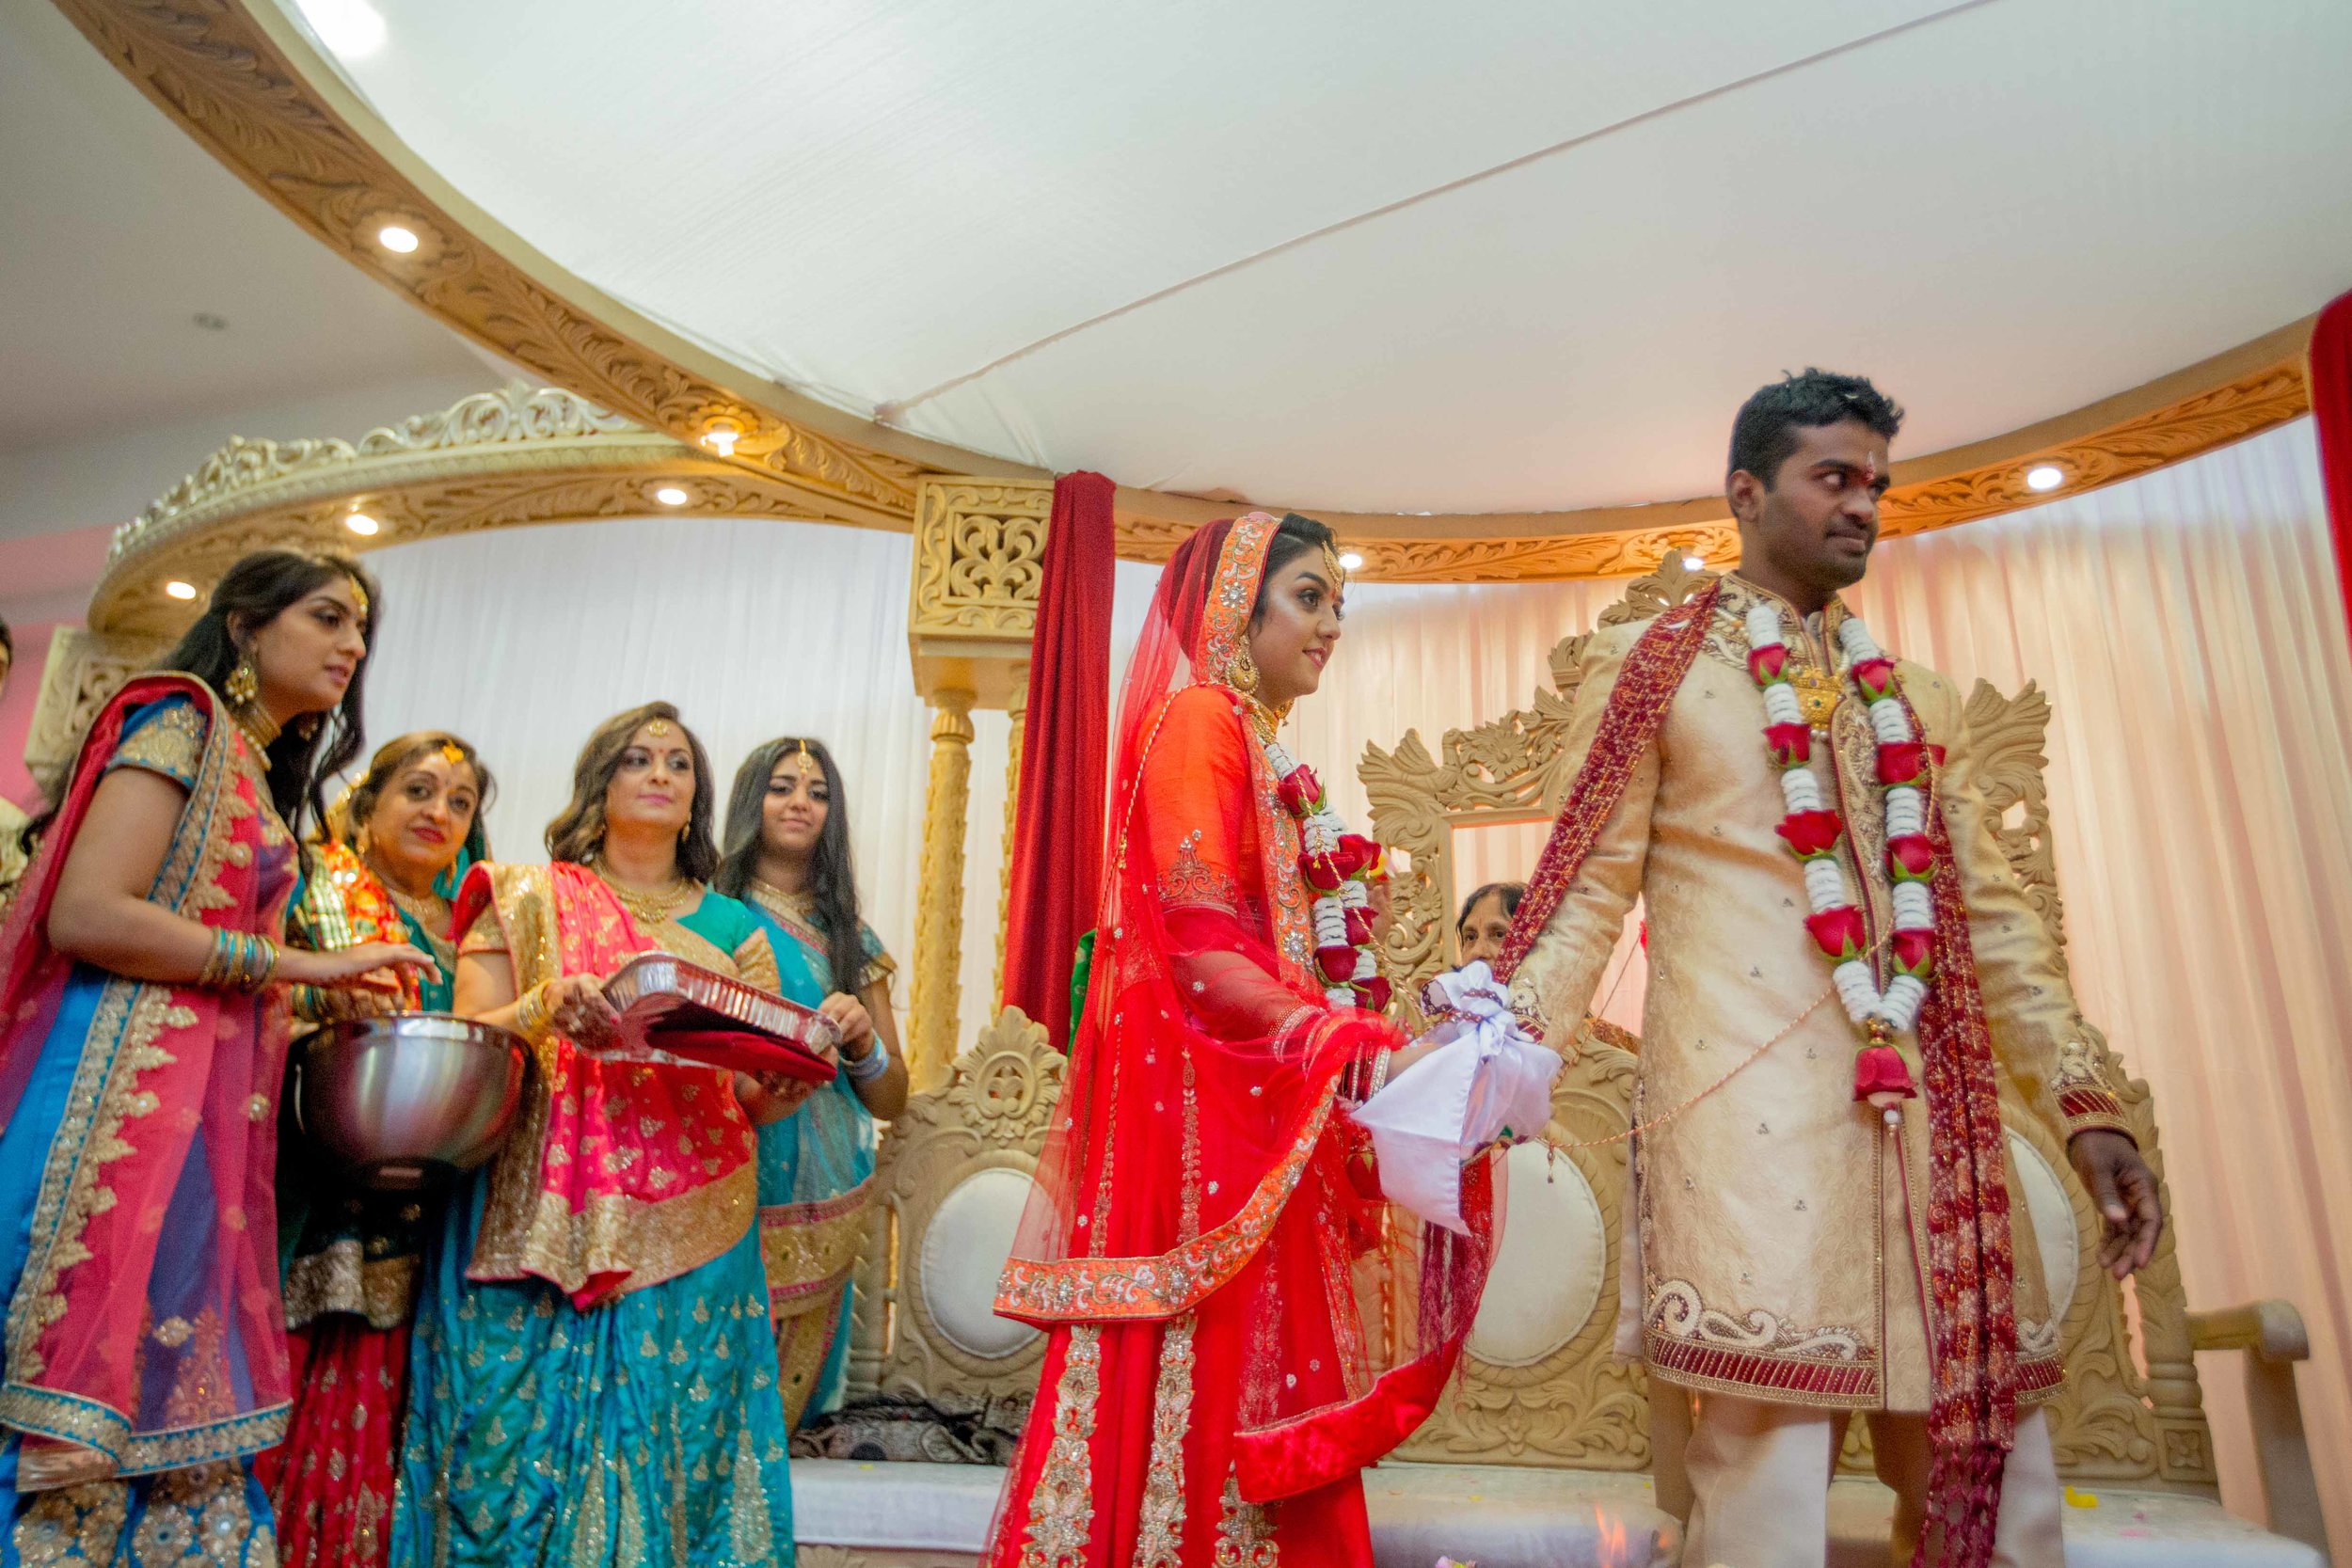 premier-banquetting-london-Hindu-asian-wedding-photographer-natalia-smith-photography-26.jpg